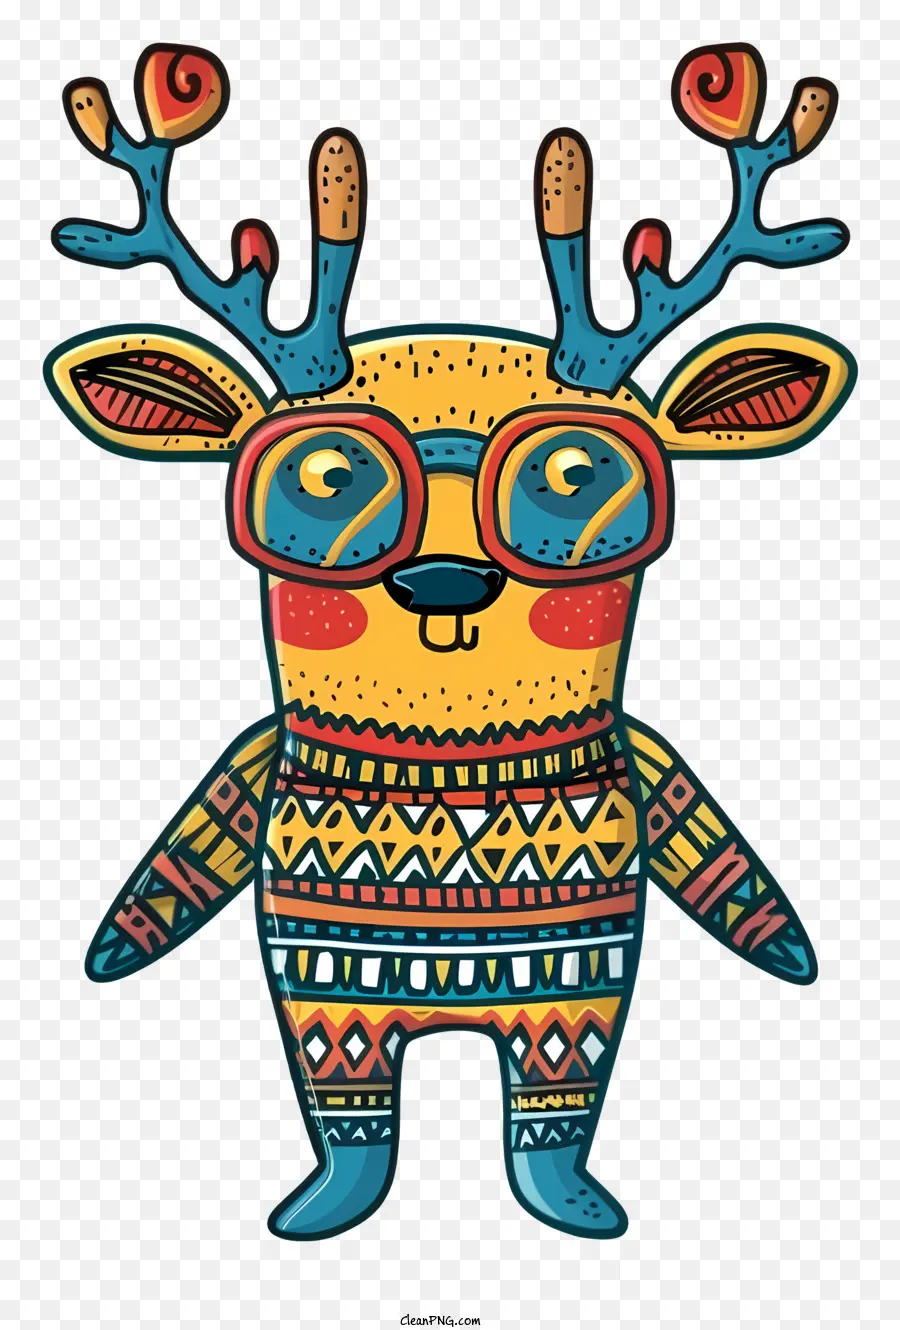 weird reindeer abstract art colorful design deer illustration animal wearing glasses